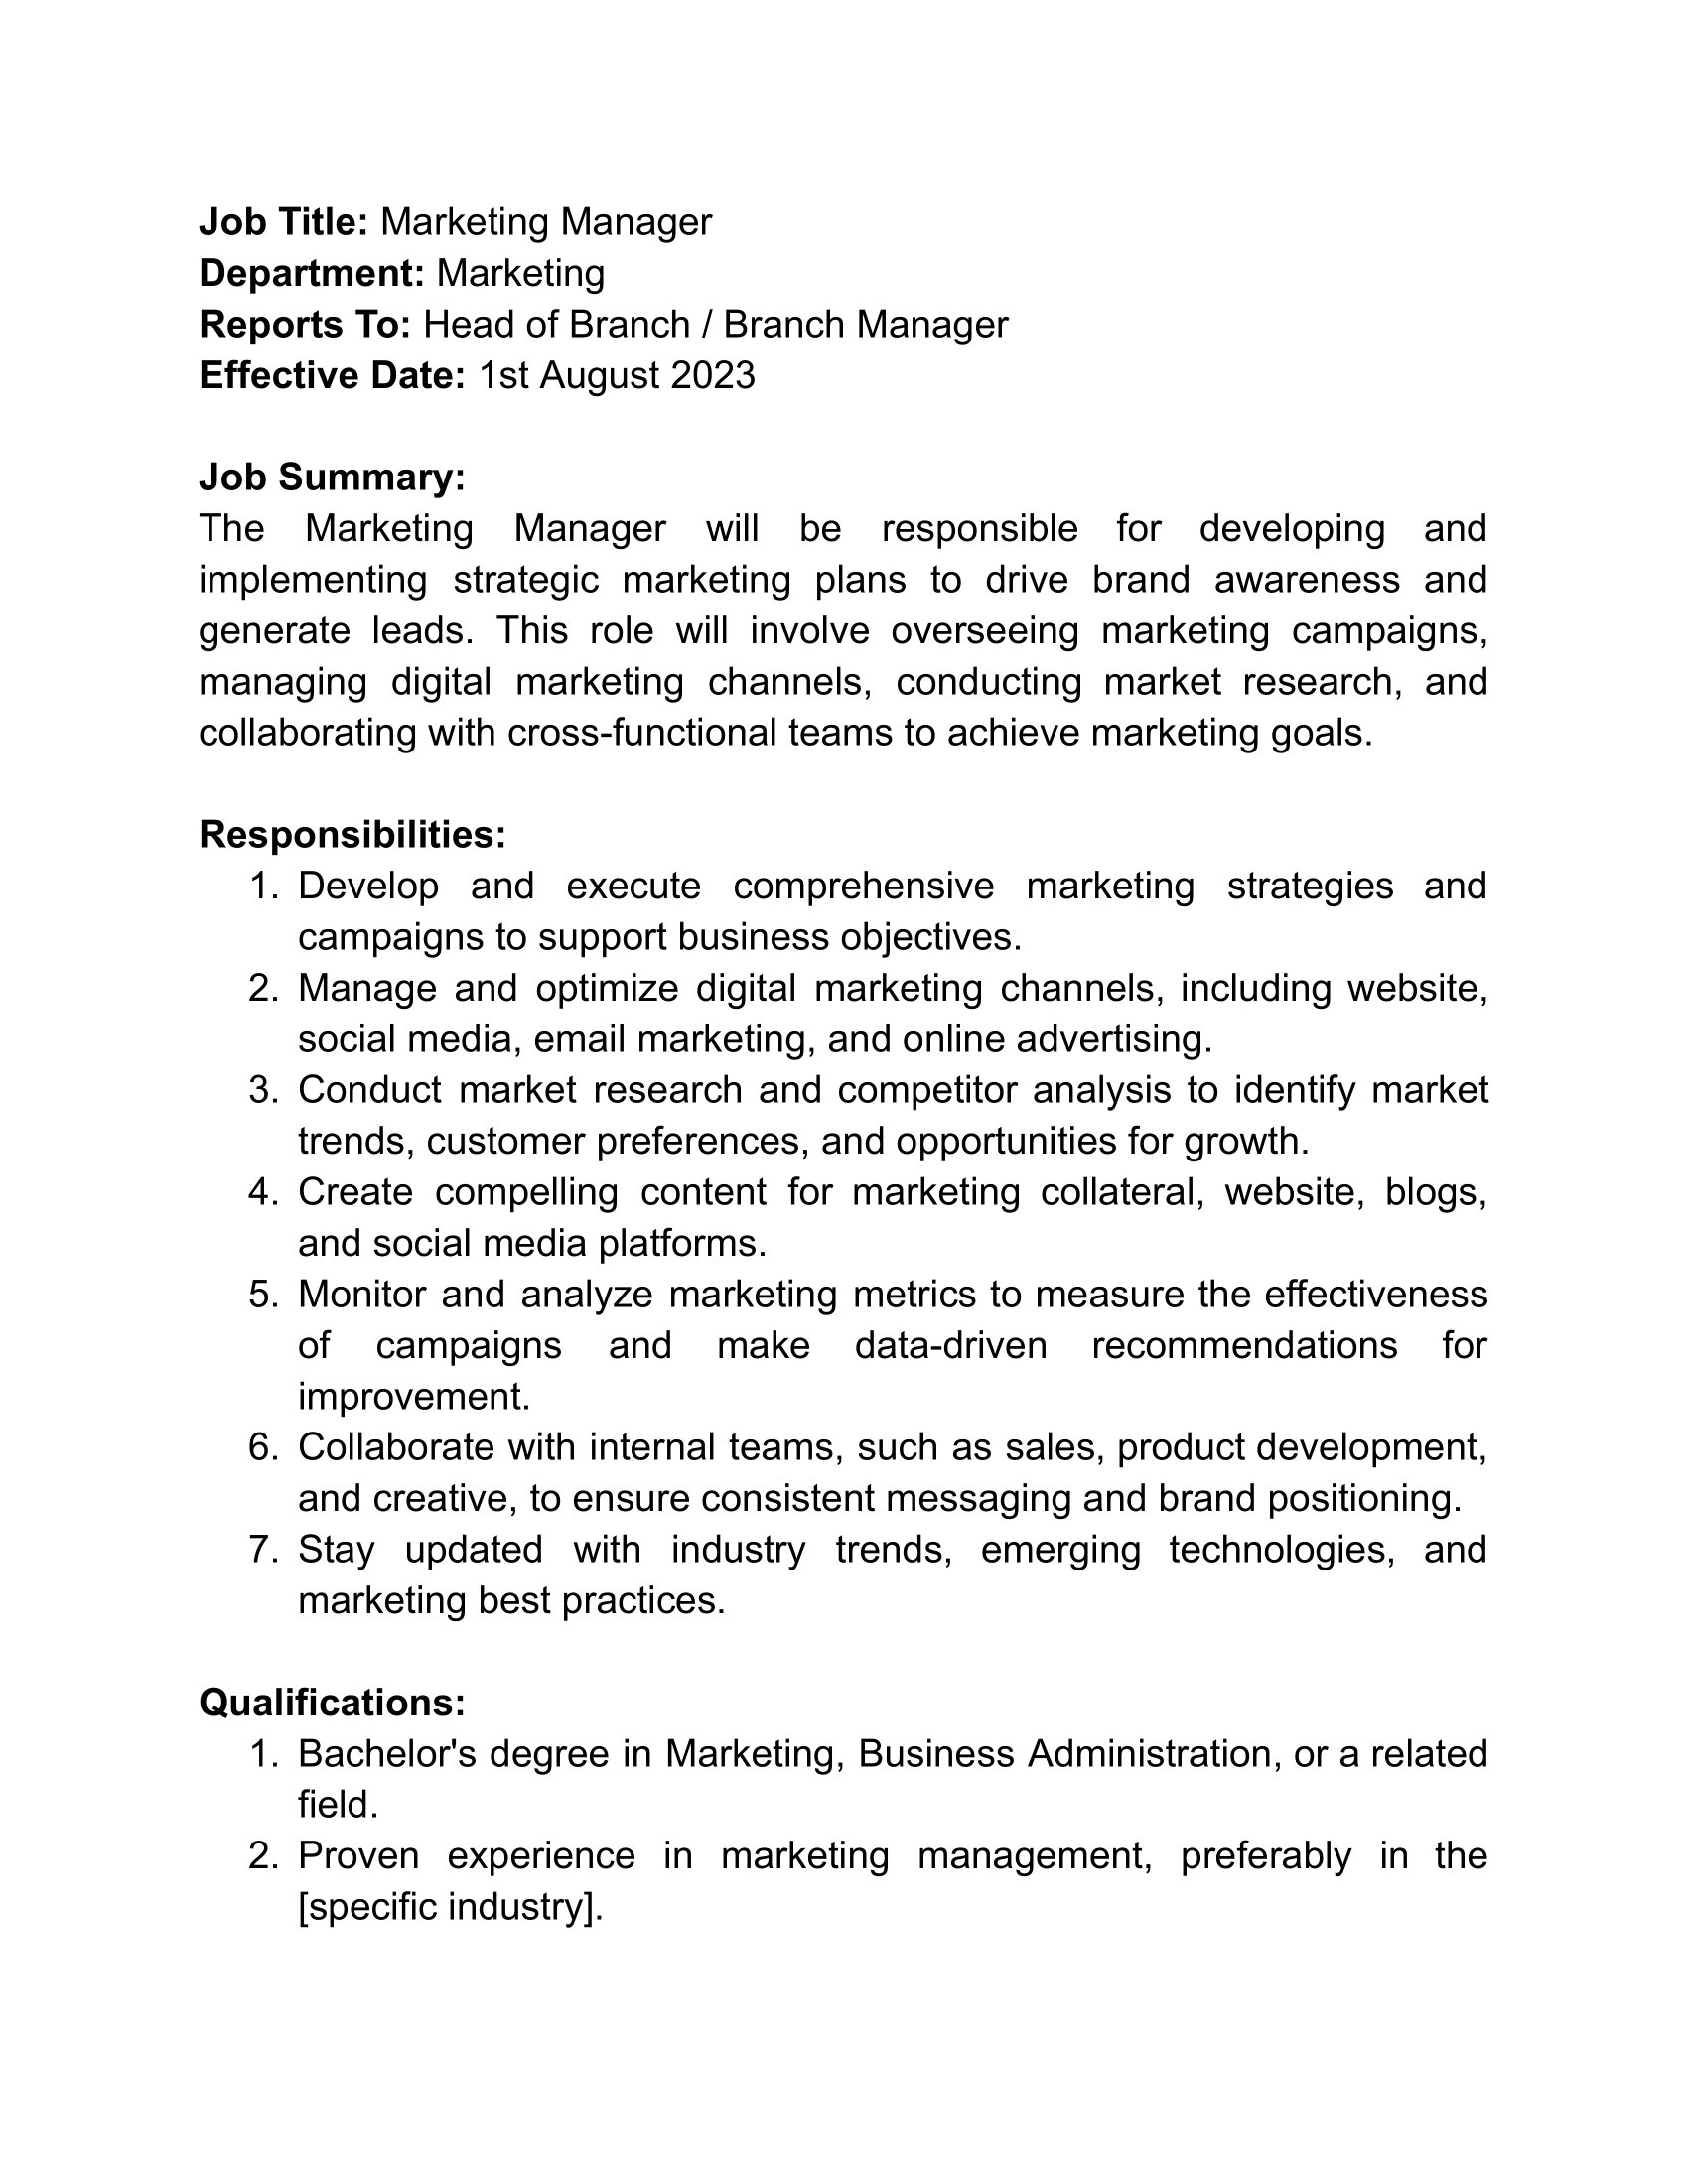 Job Description Example_ Marketing Manager-1